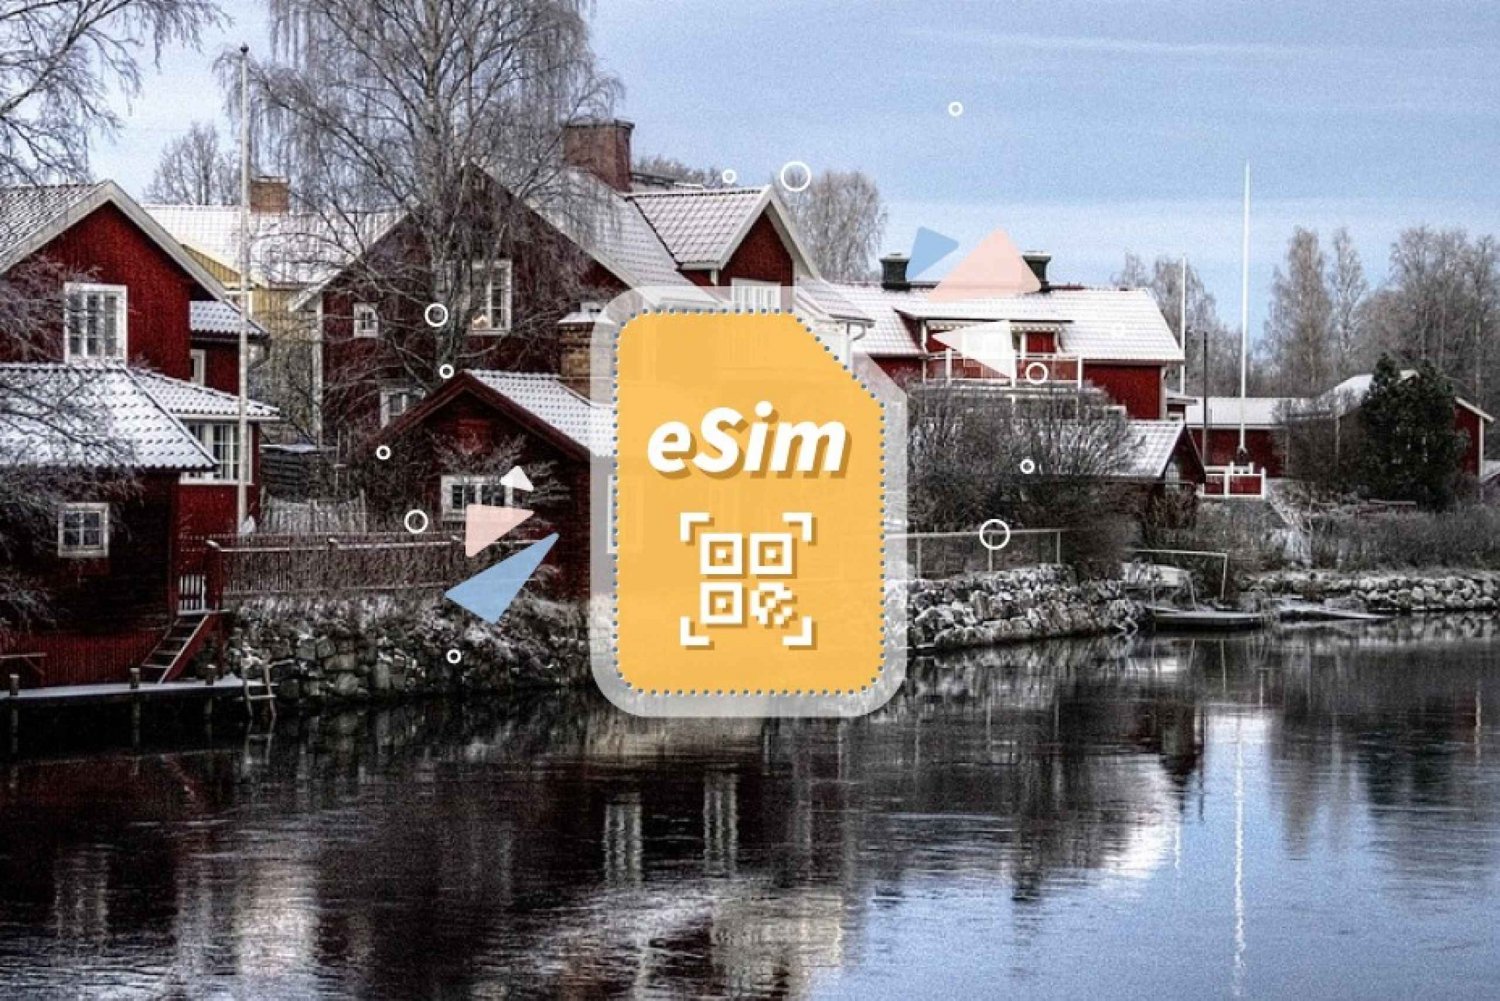 Sweden/Europe: 5G eSim Mobile Data Plan